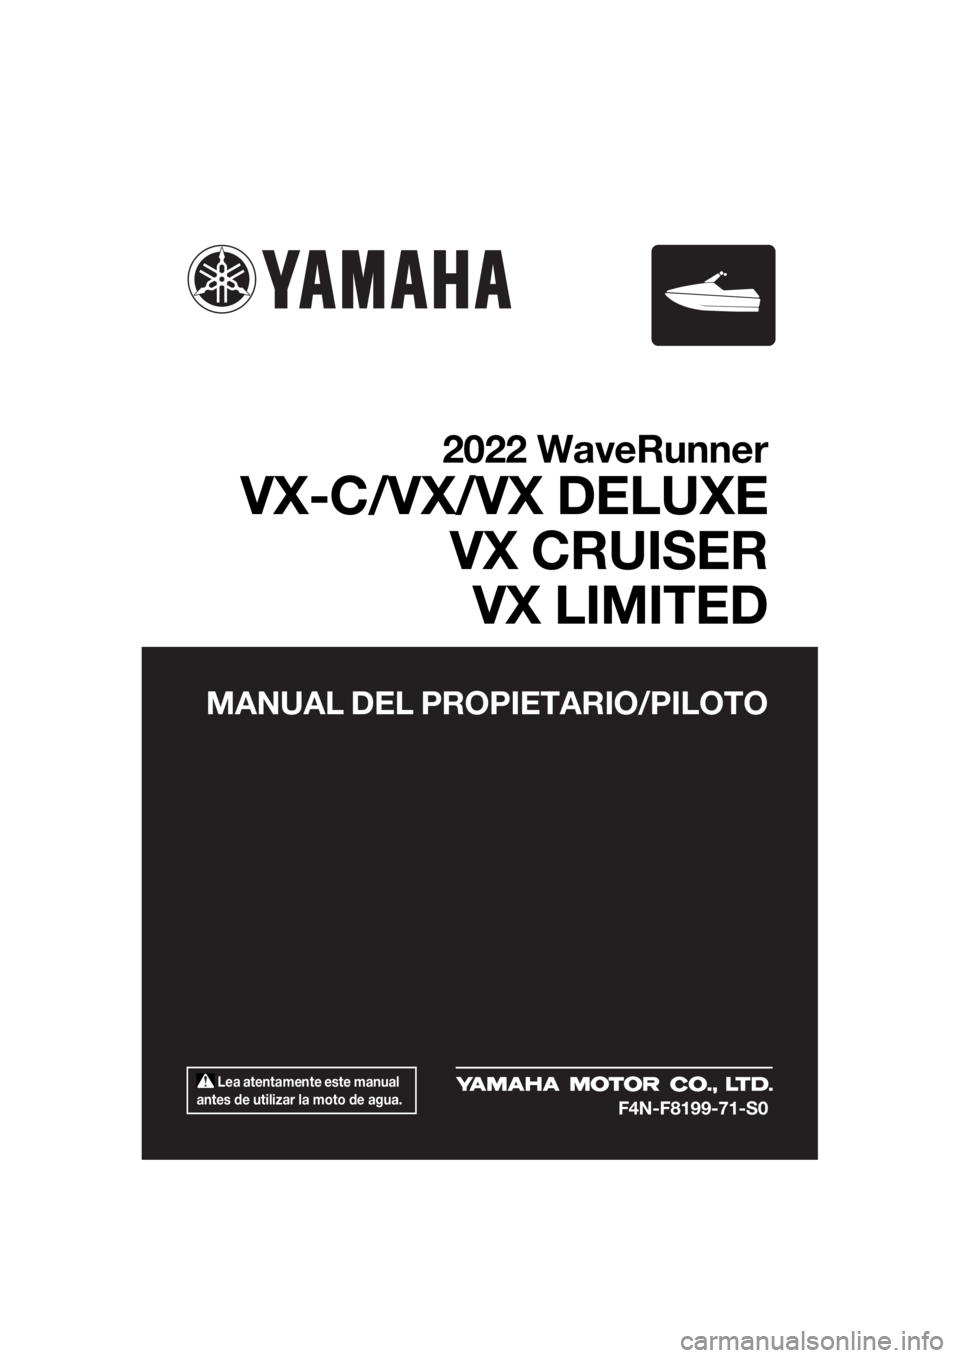 YAMAHA VX LIMITED 2022  Manuale de Empleo (in Spanish) 